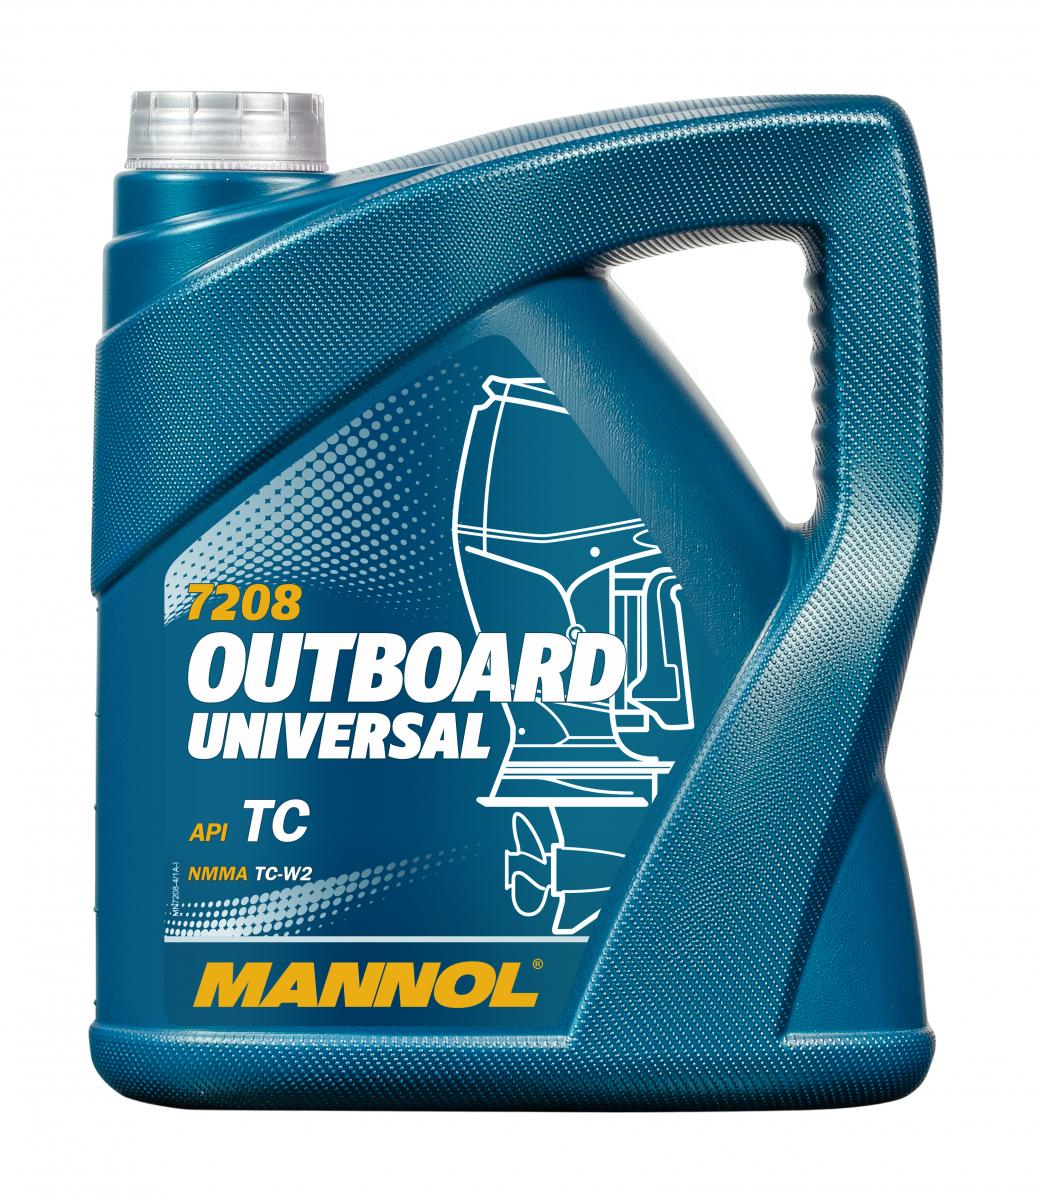 8 Liter (2x4) MANNOL Outboard Universal API TC Motoröl Außenbordmotoröl